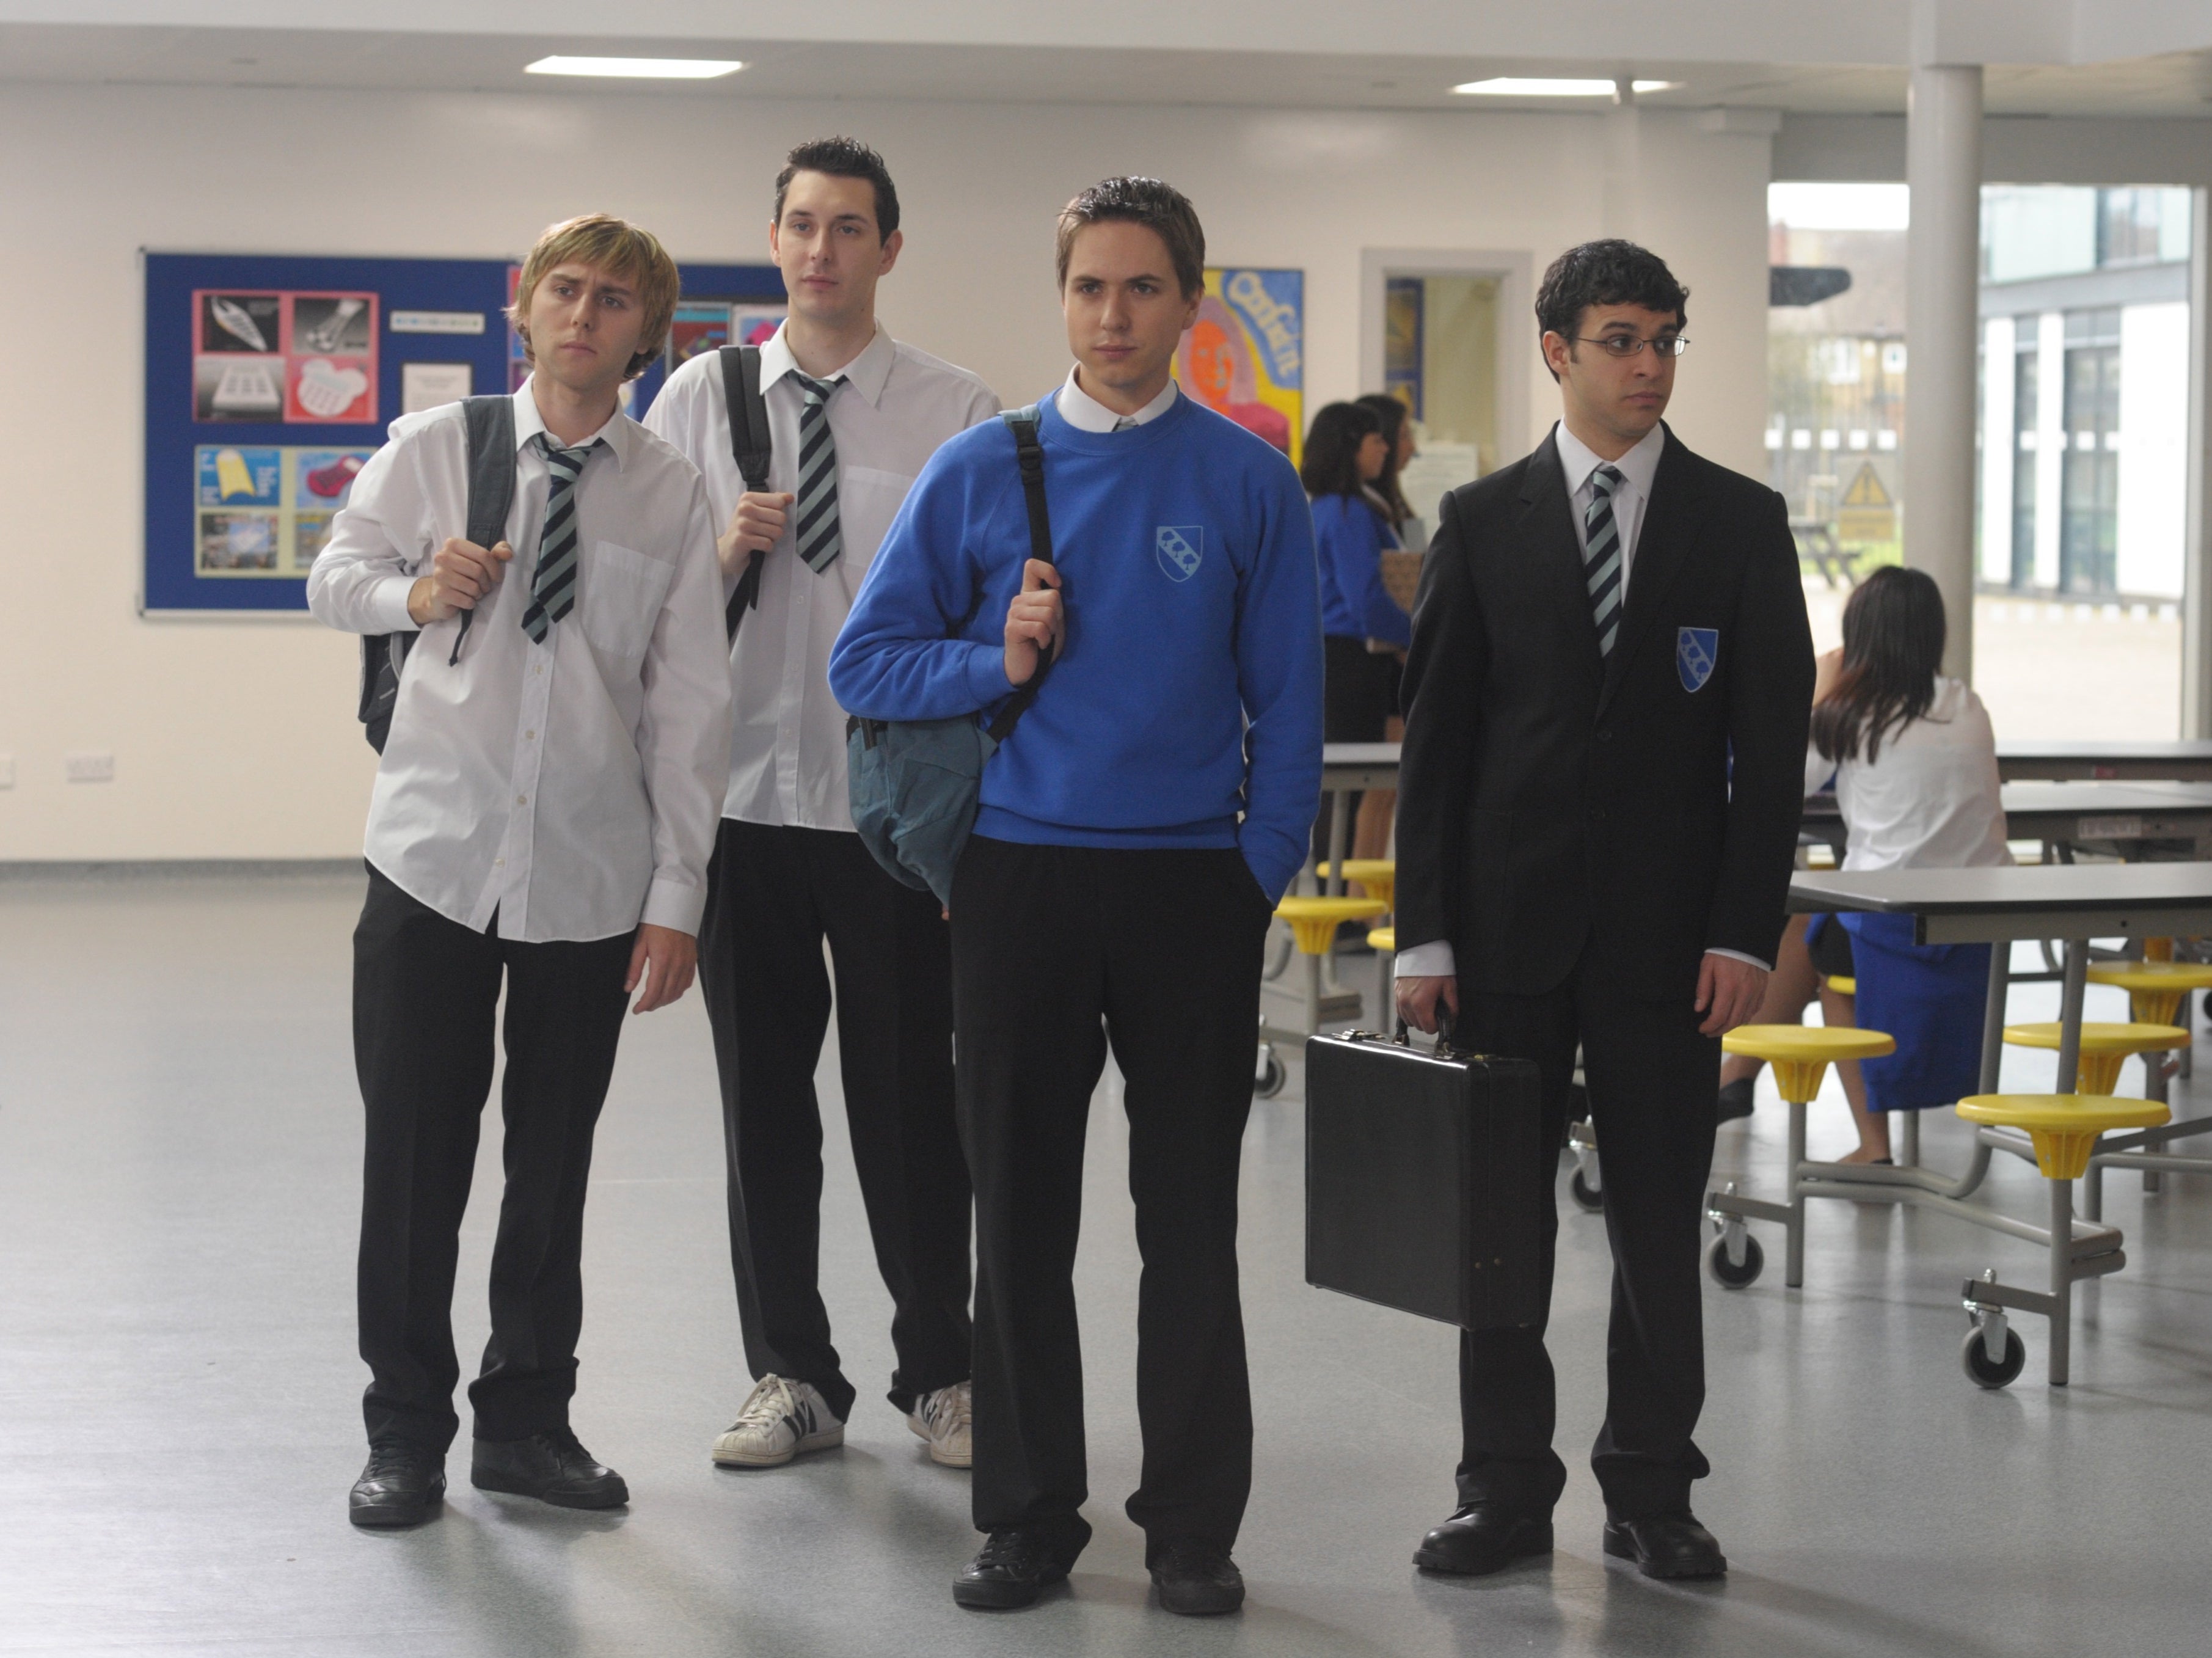 The lads: James Buckley, Blake Harrison, Joe Thomas and Simon Bird in ‘The Inbetweeners Movie’, 2011